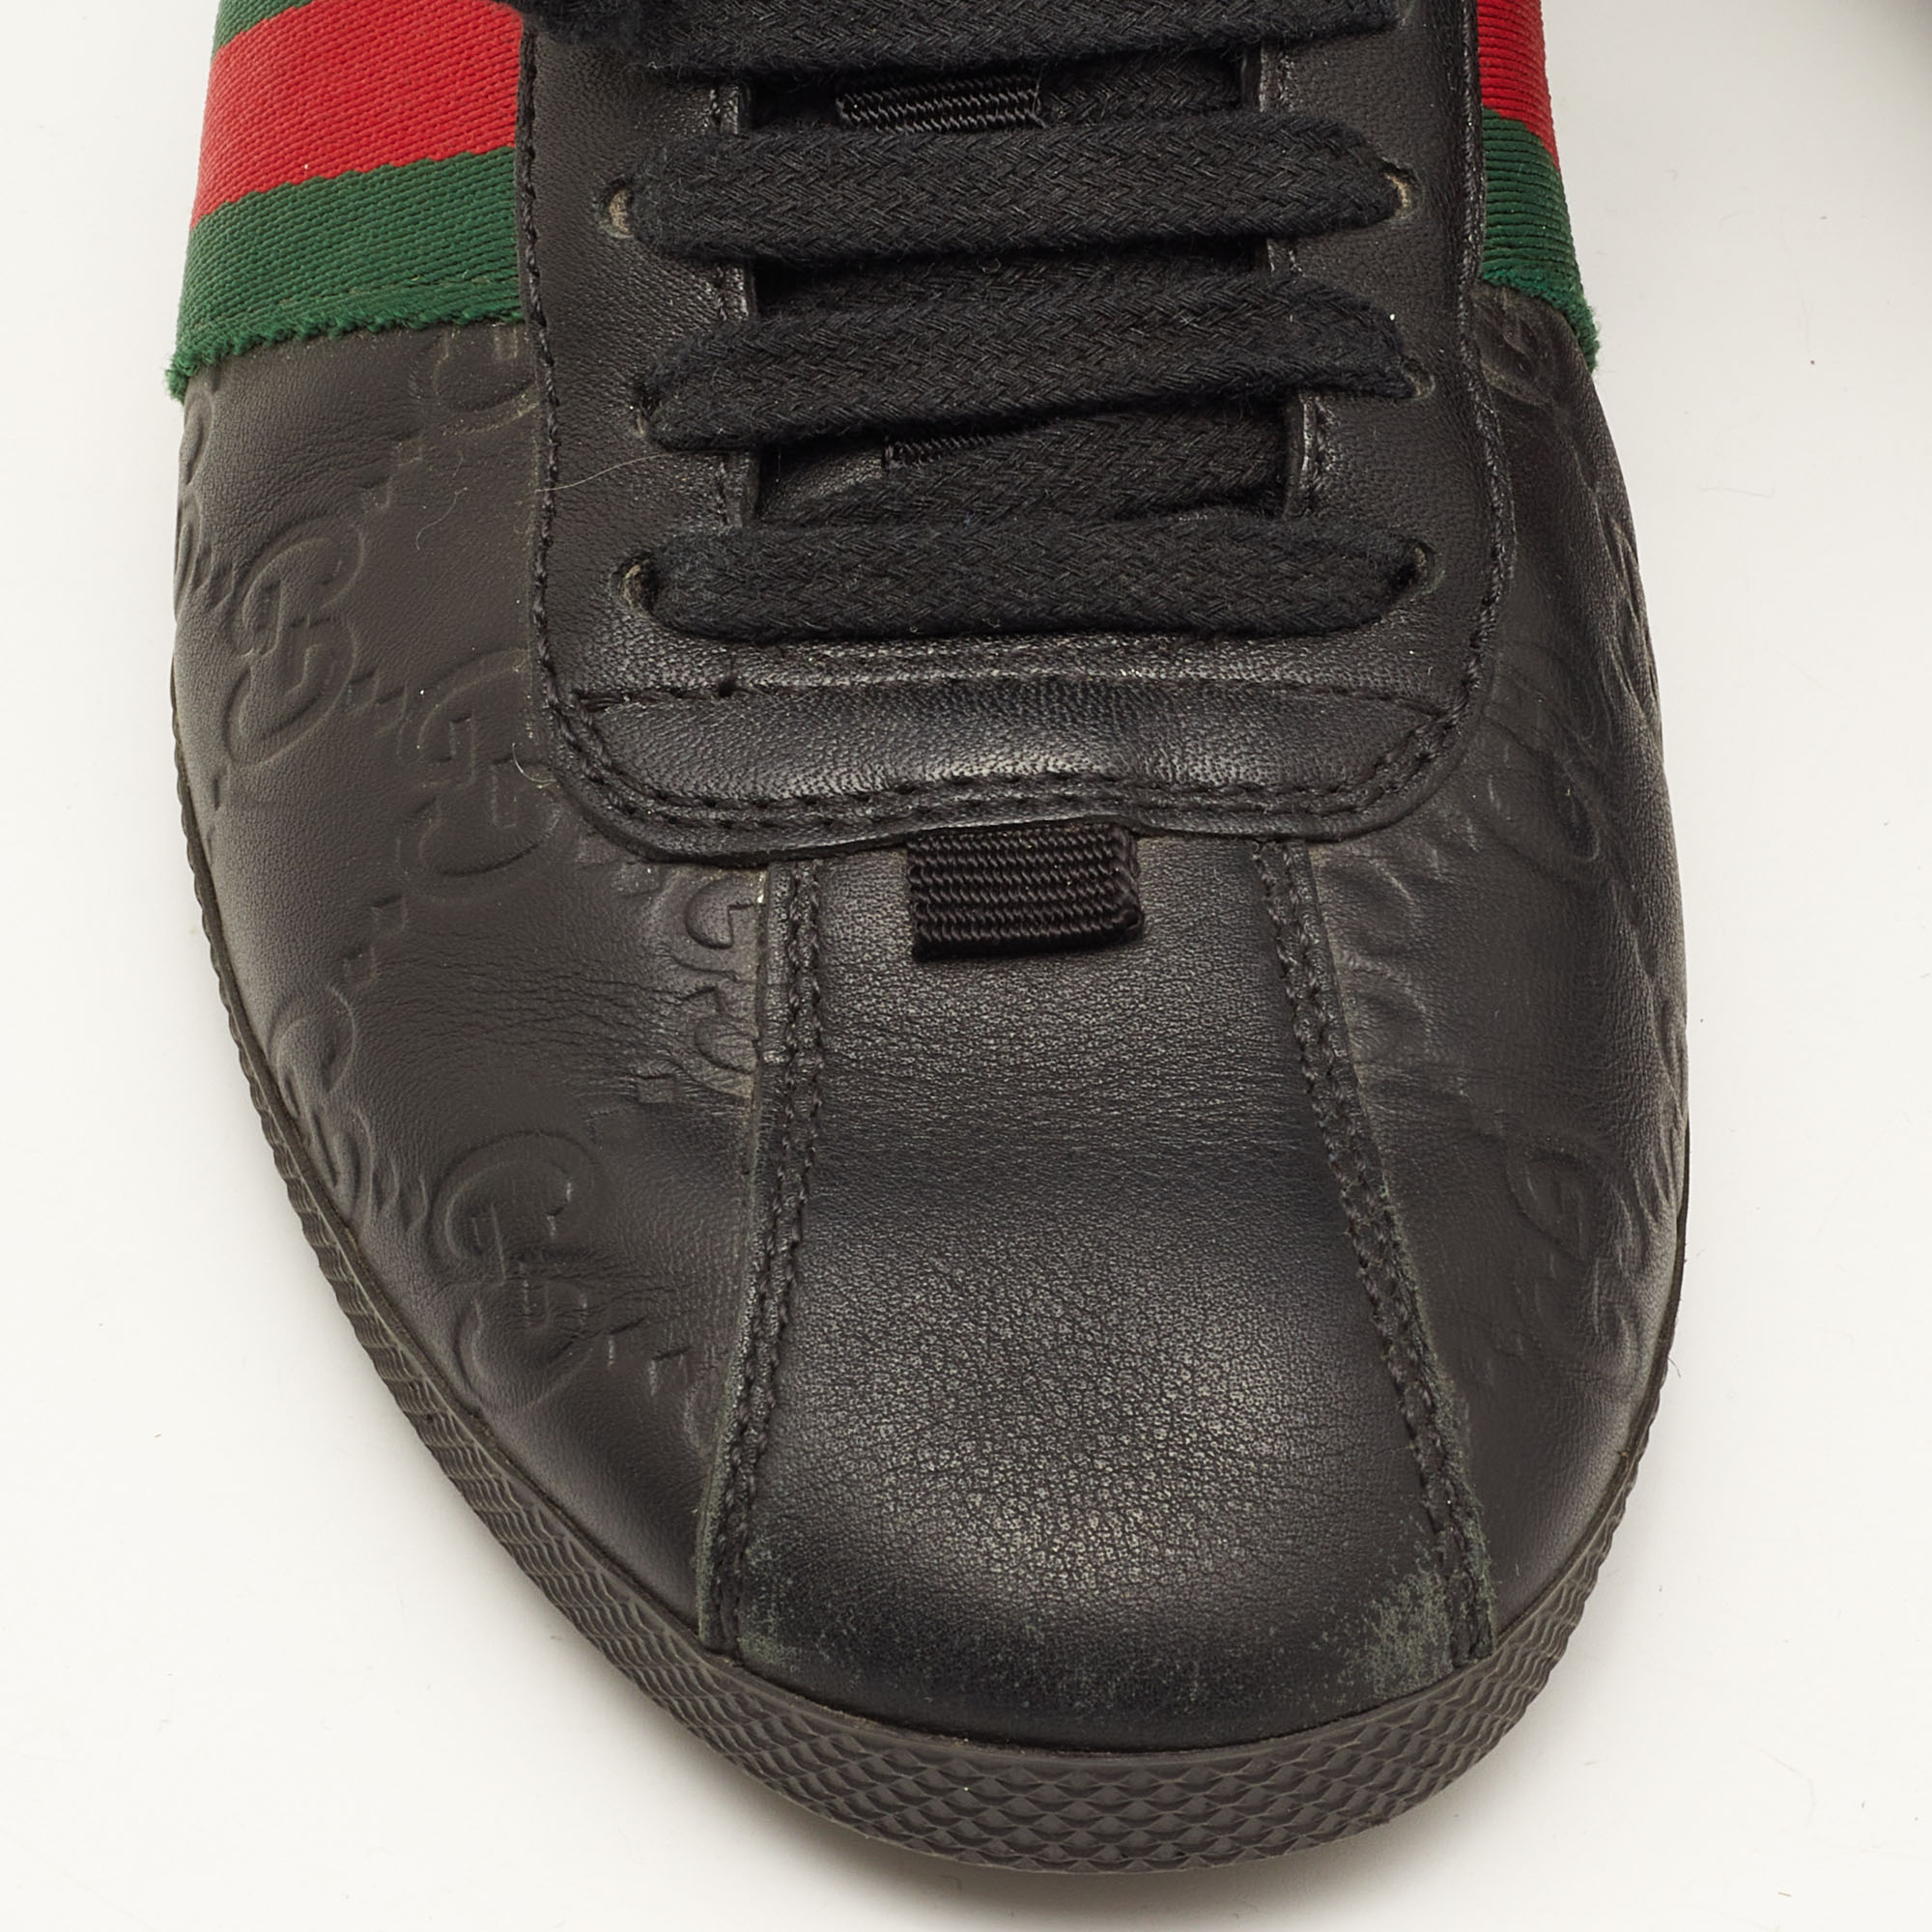 Gucci Black Guccissima Leather Web Ace Sneakers Size 37